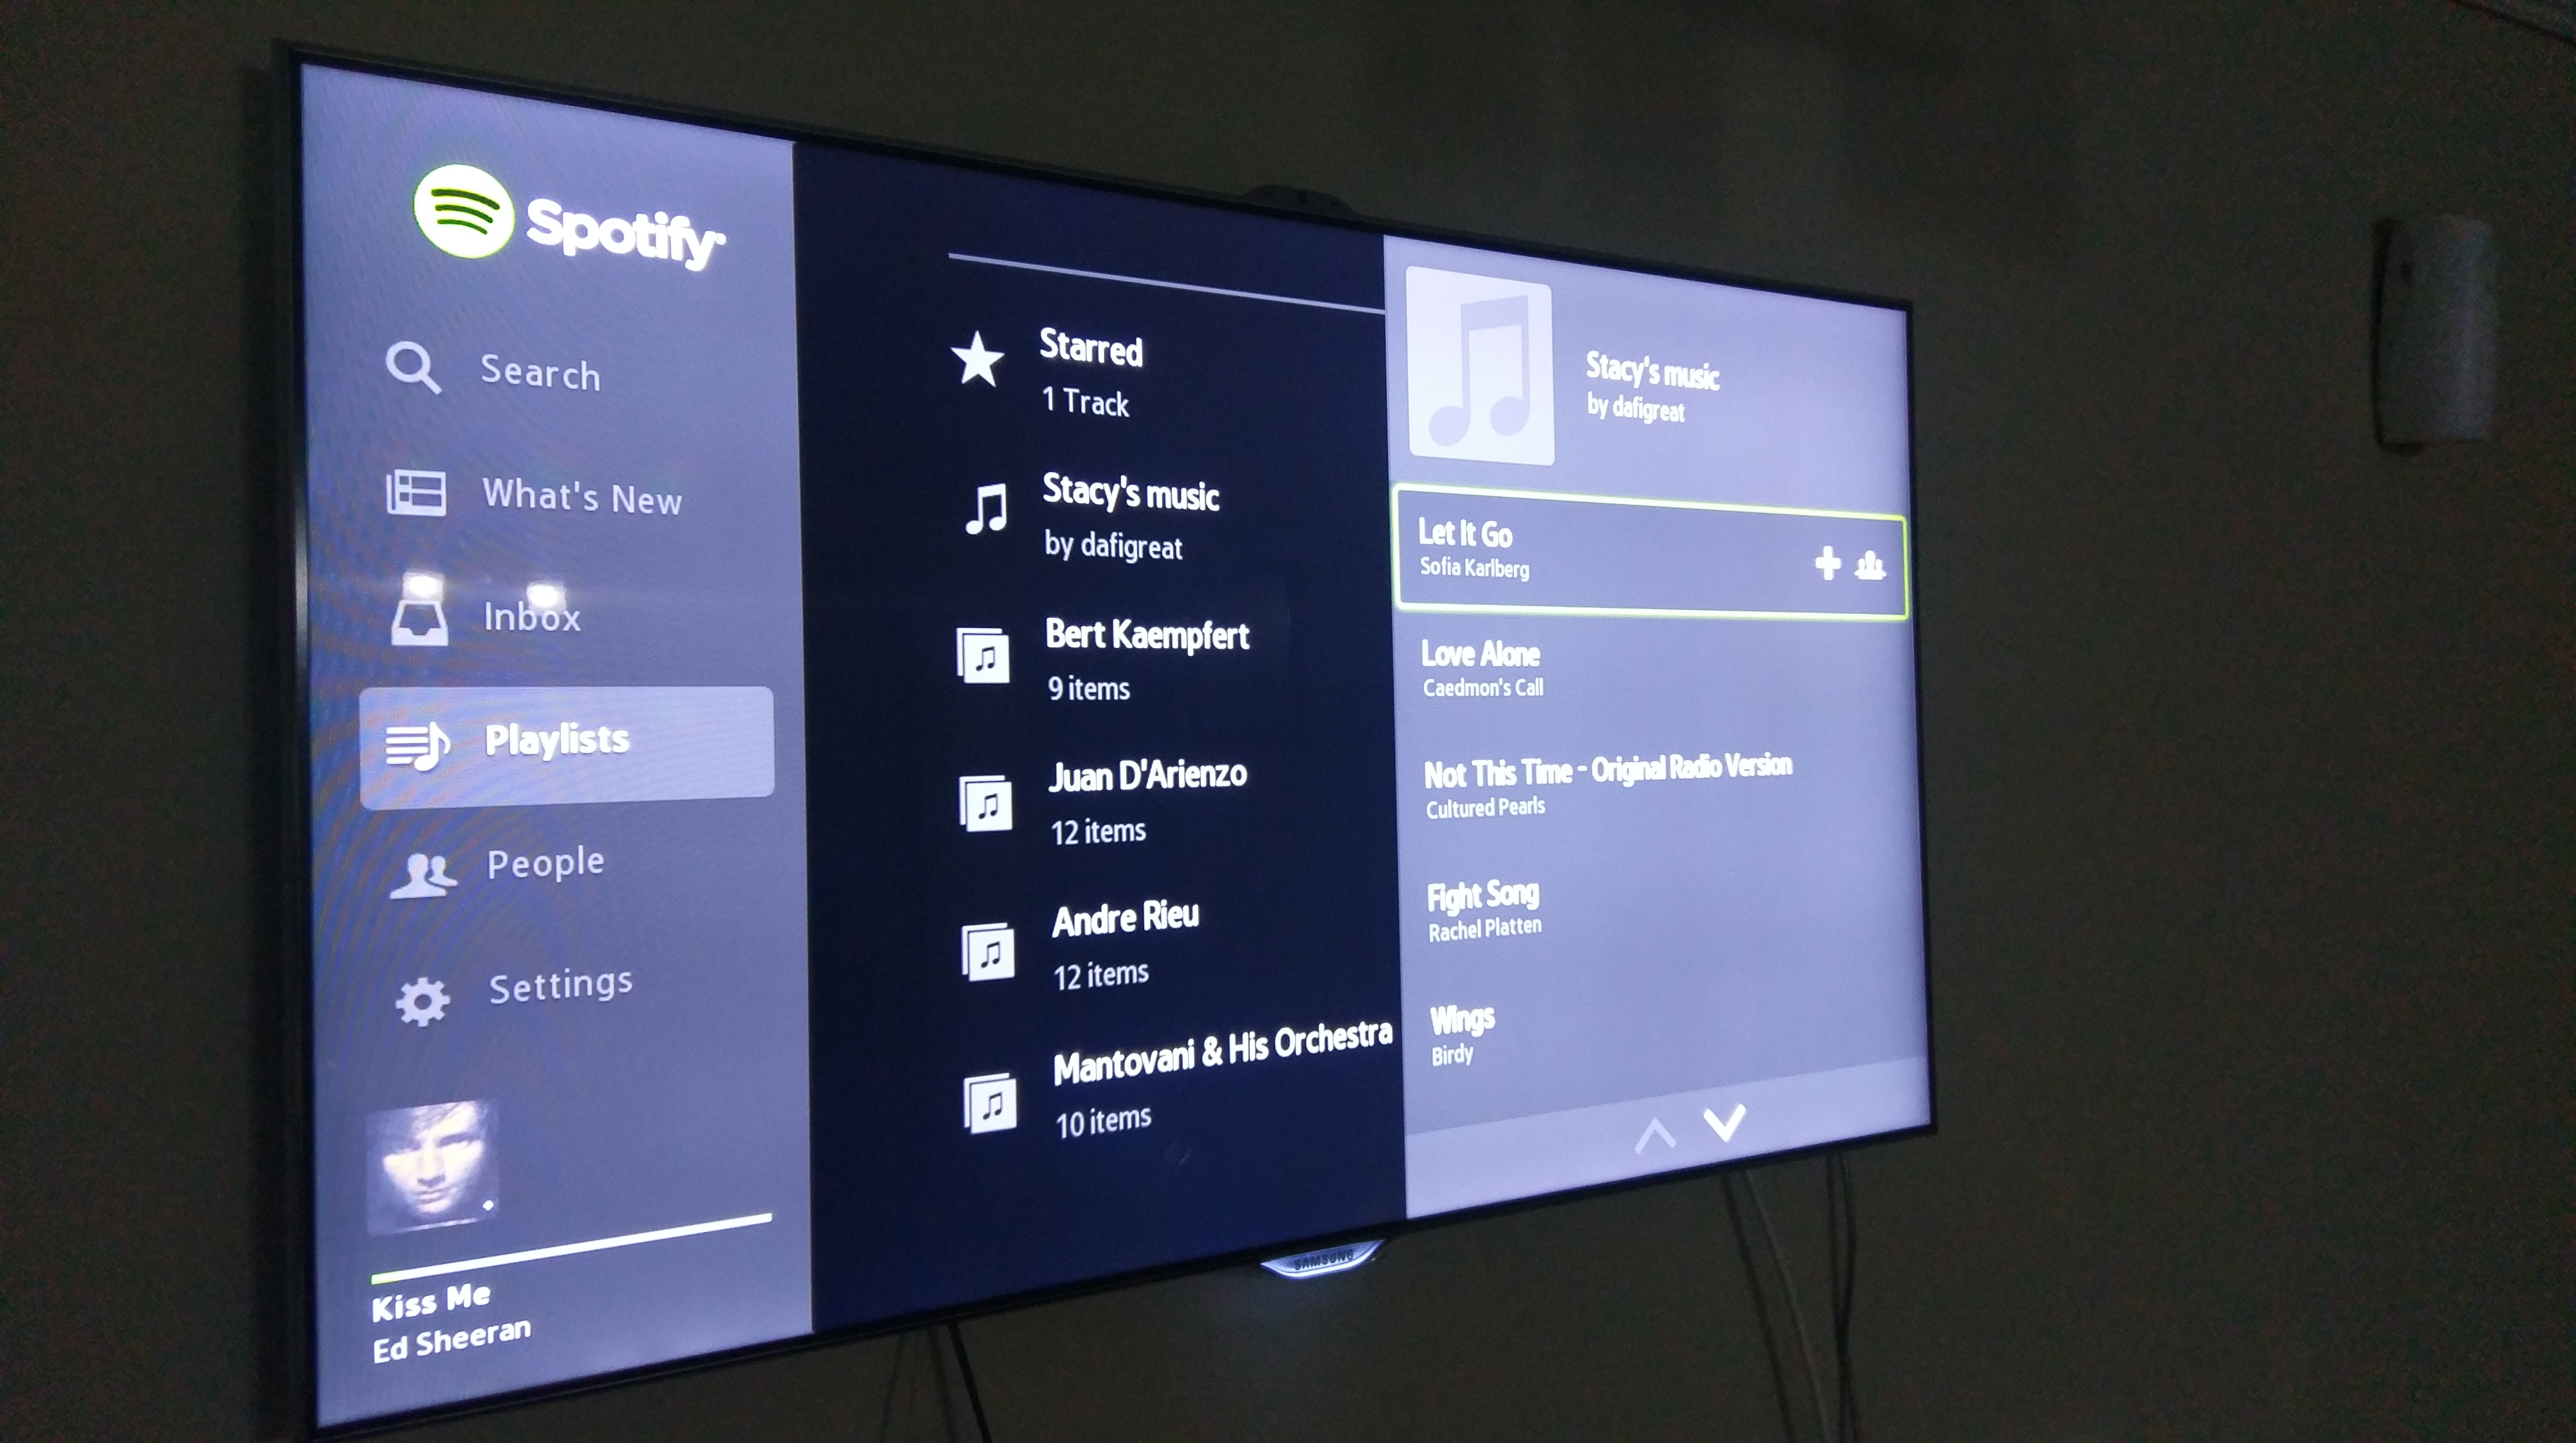 Playlist not showing on smart tv - The Spotify Community